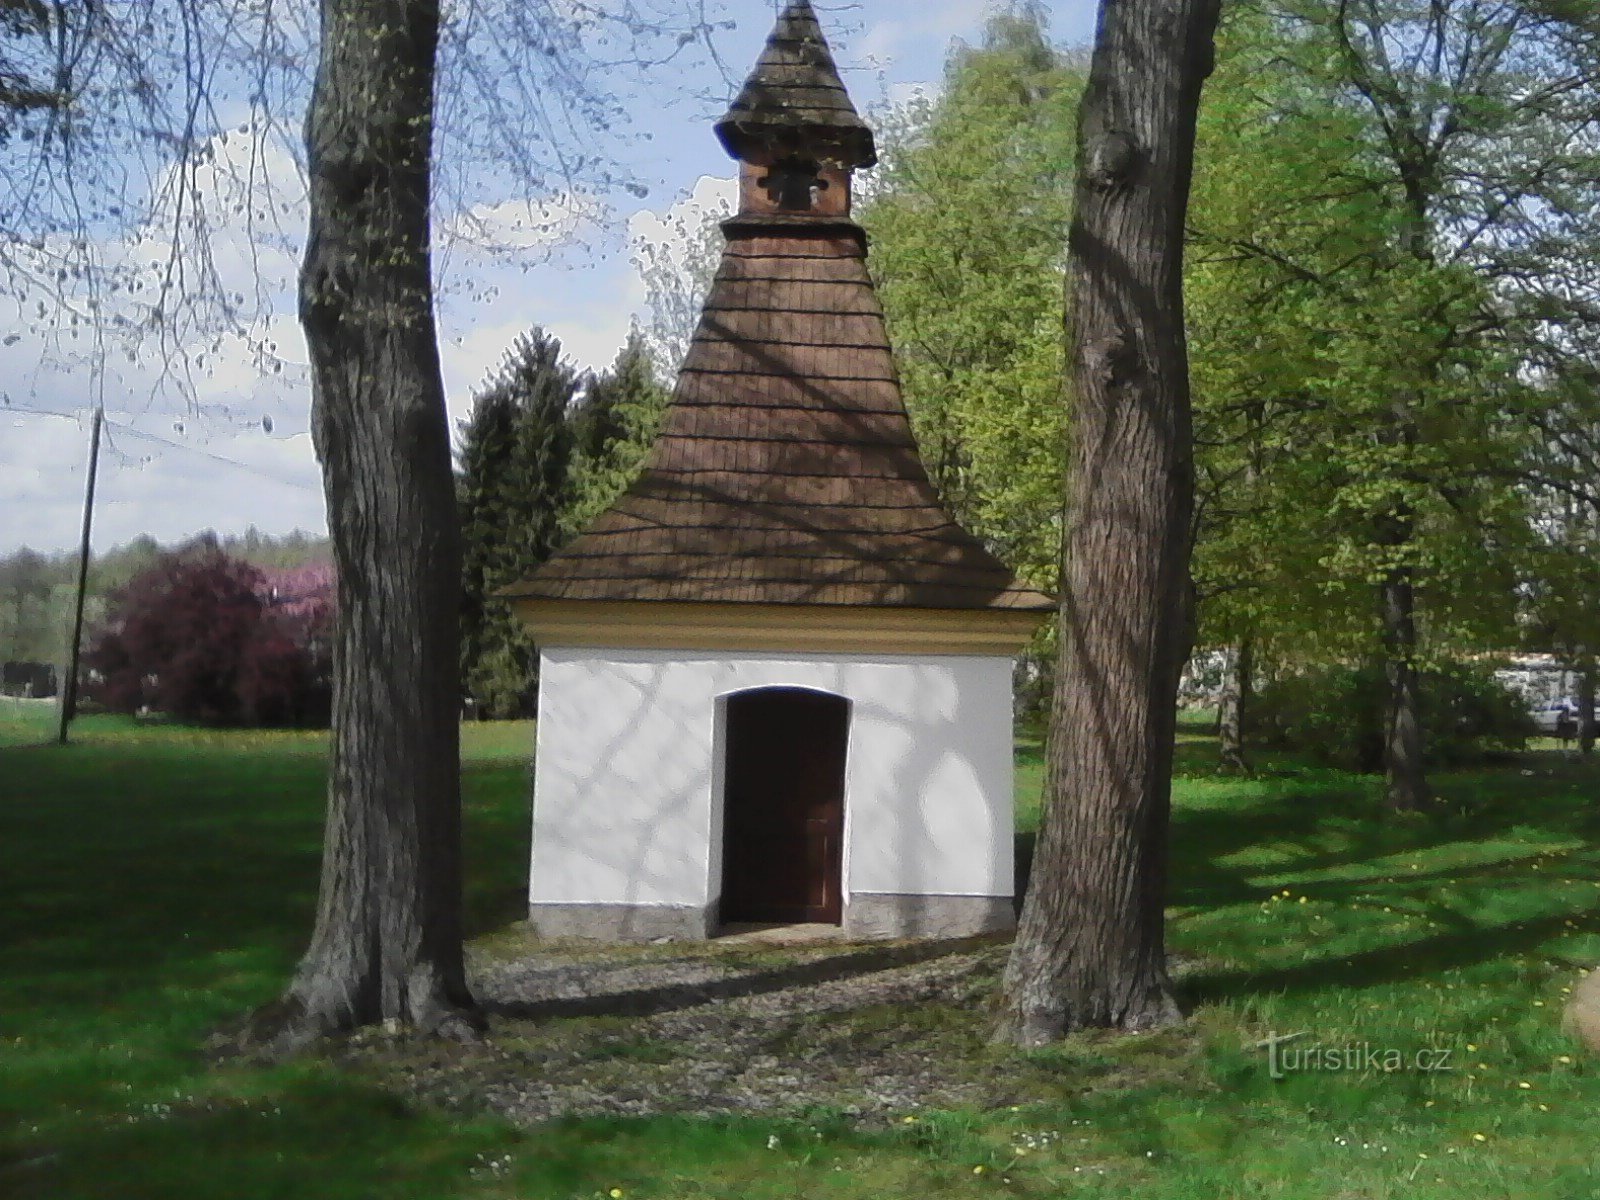 1. Capela Sf. Anna în Leskovice.